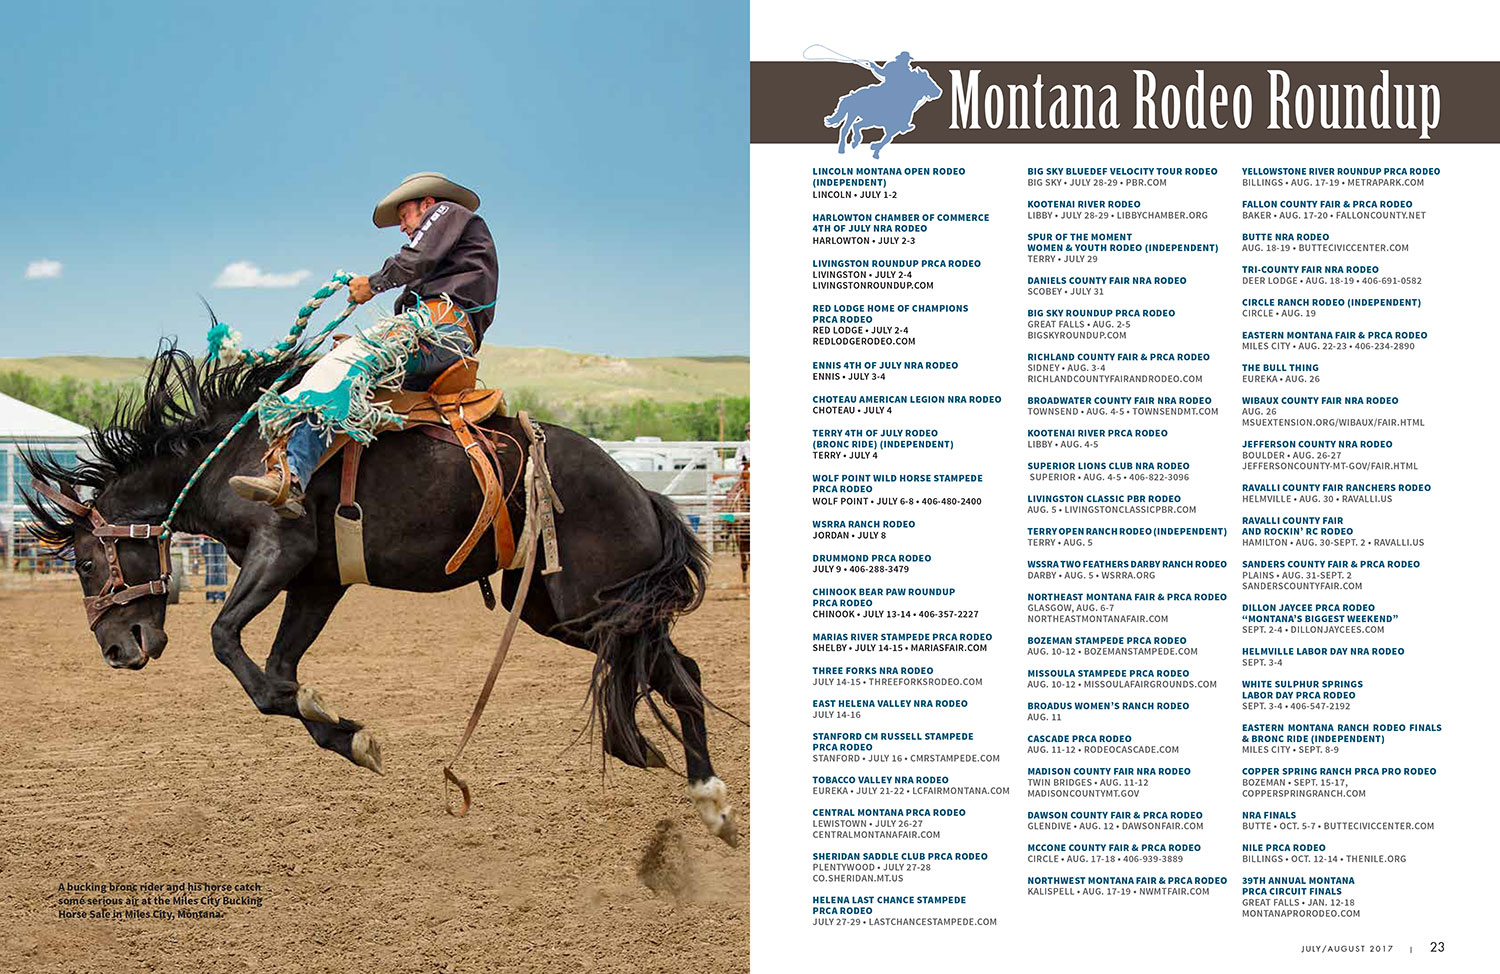 Montana-Magazine-Photos-of-Rodeo-Photos-by-Todd-Klassy-04.jpg